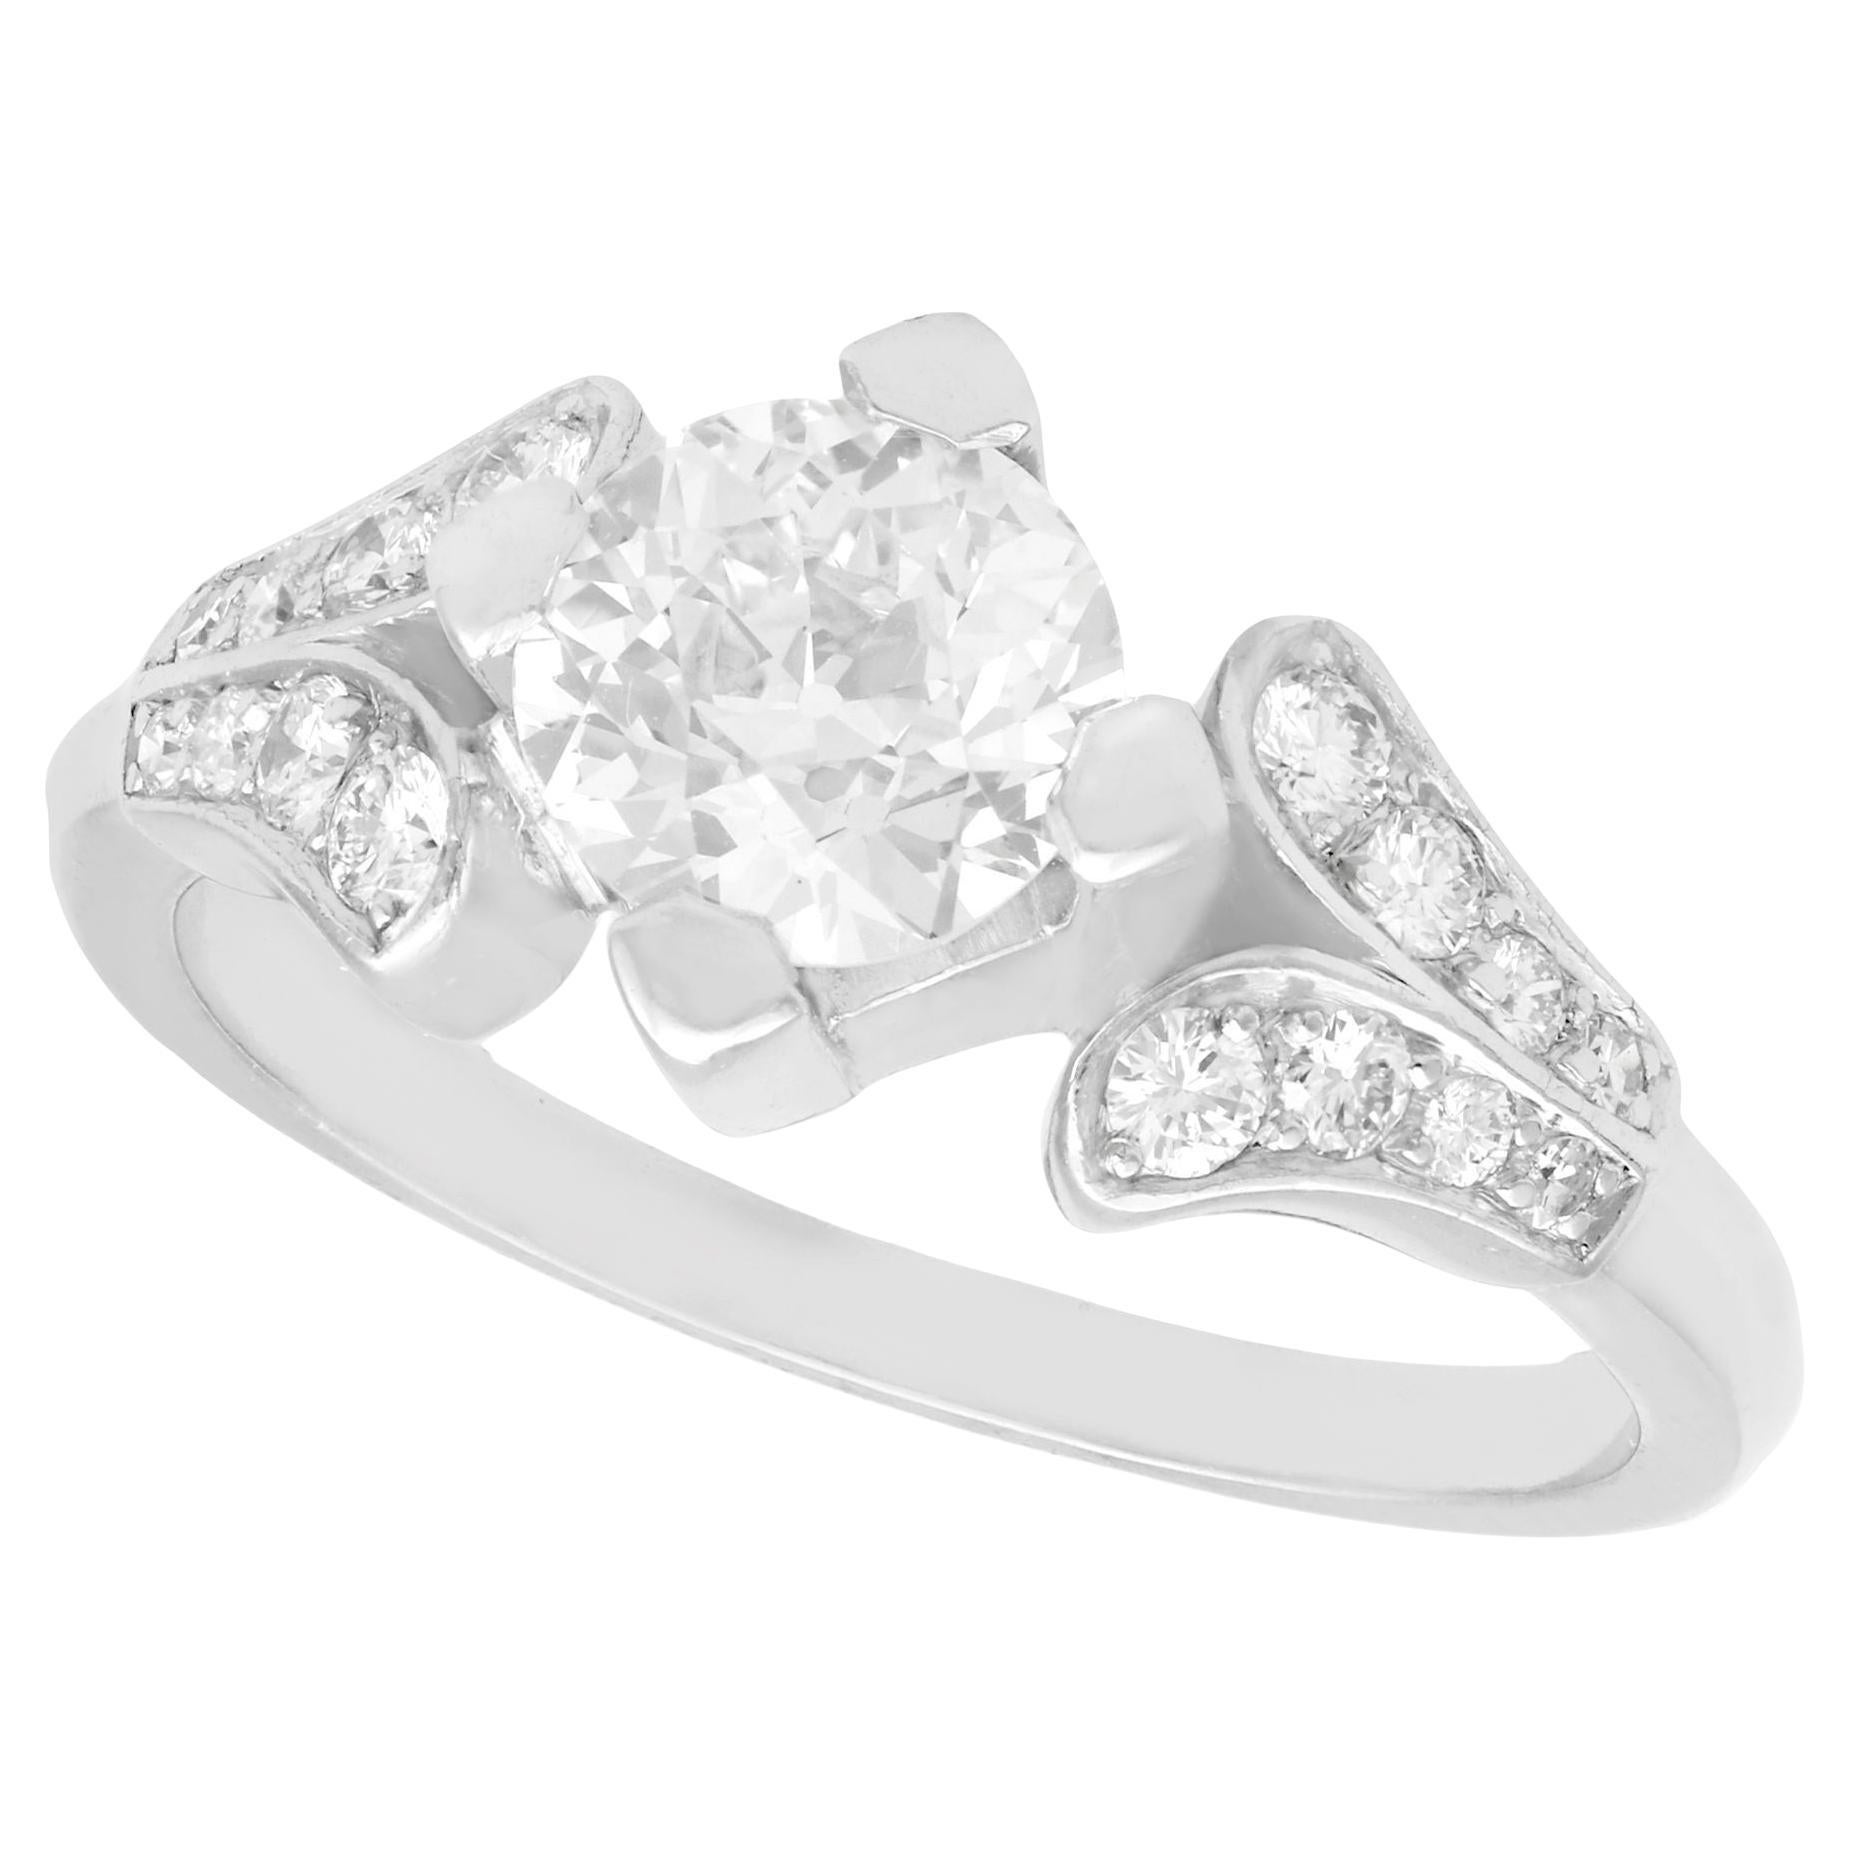 Vintage 1940s 1.29 Carat Diamond and Platinum Solitaire Ring